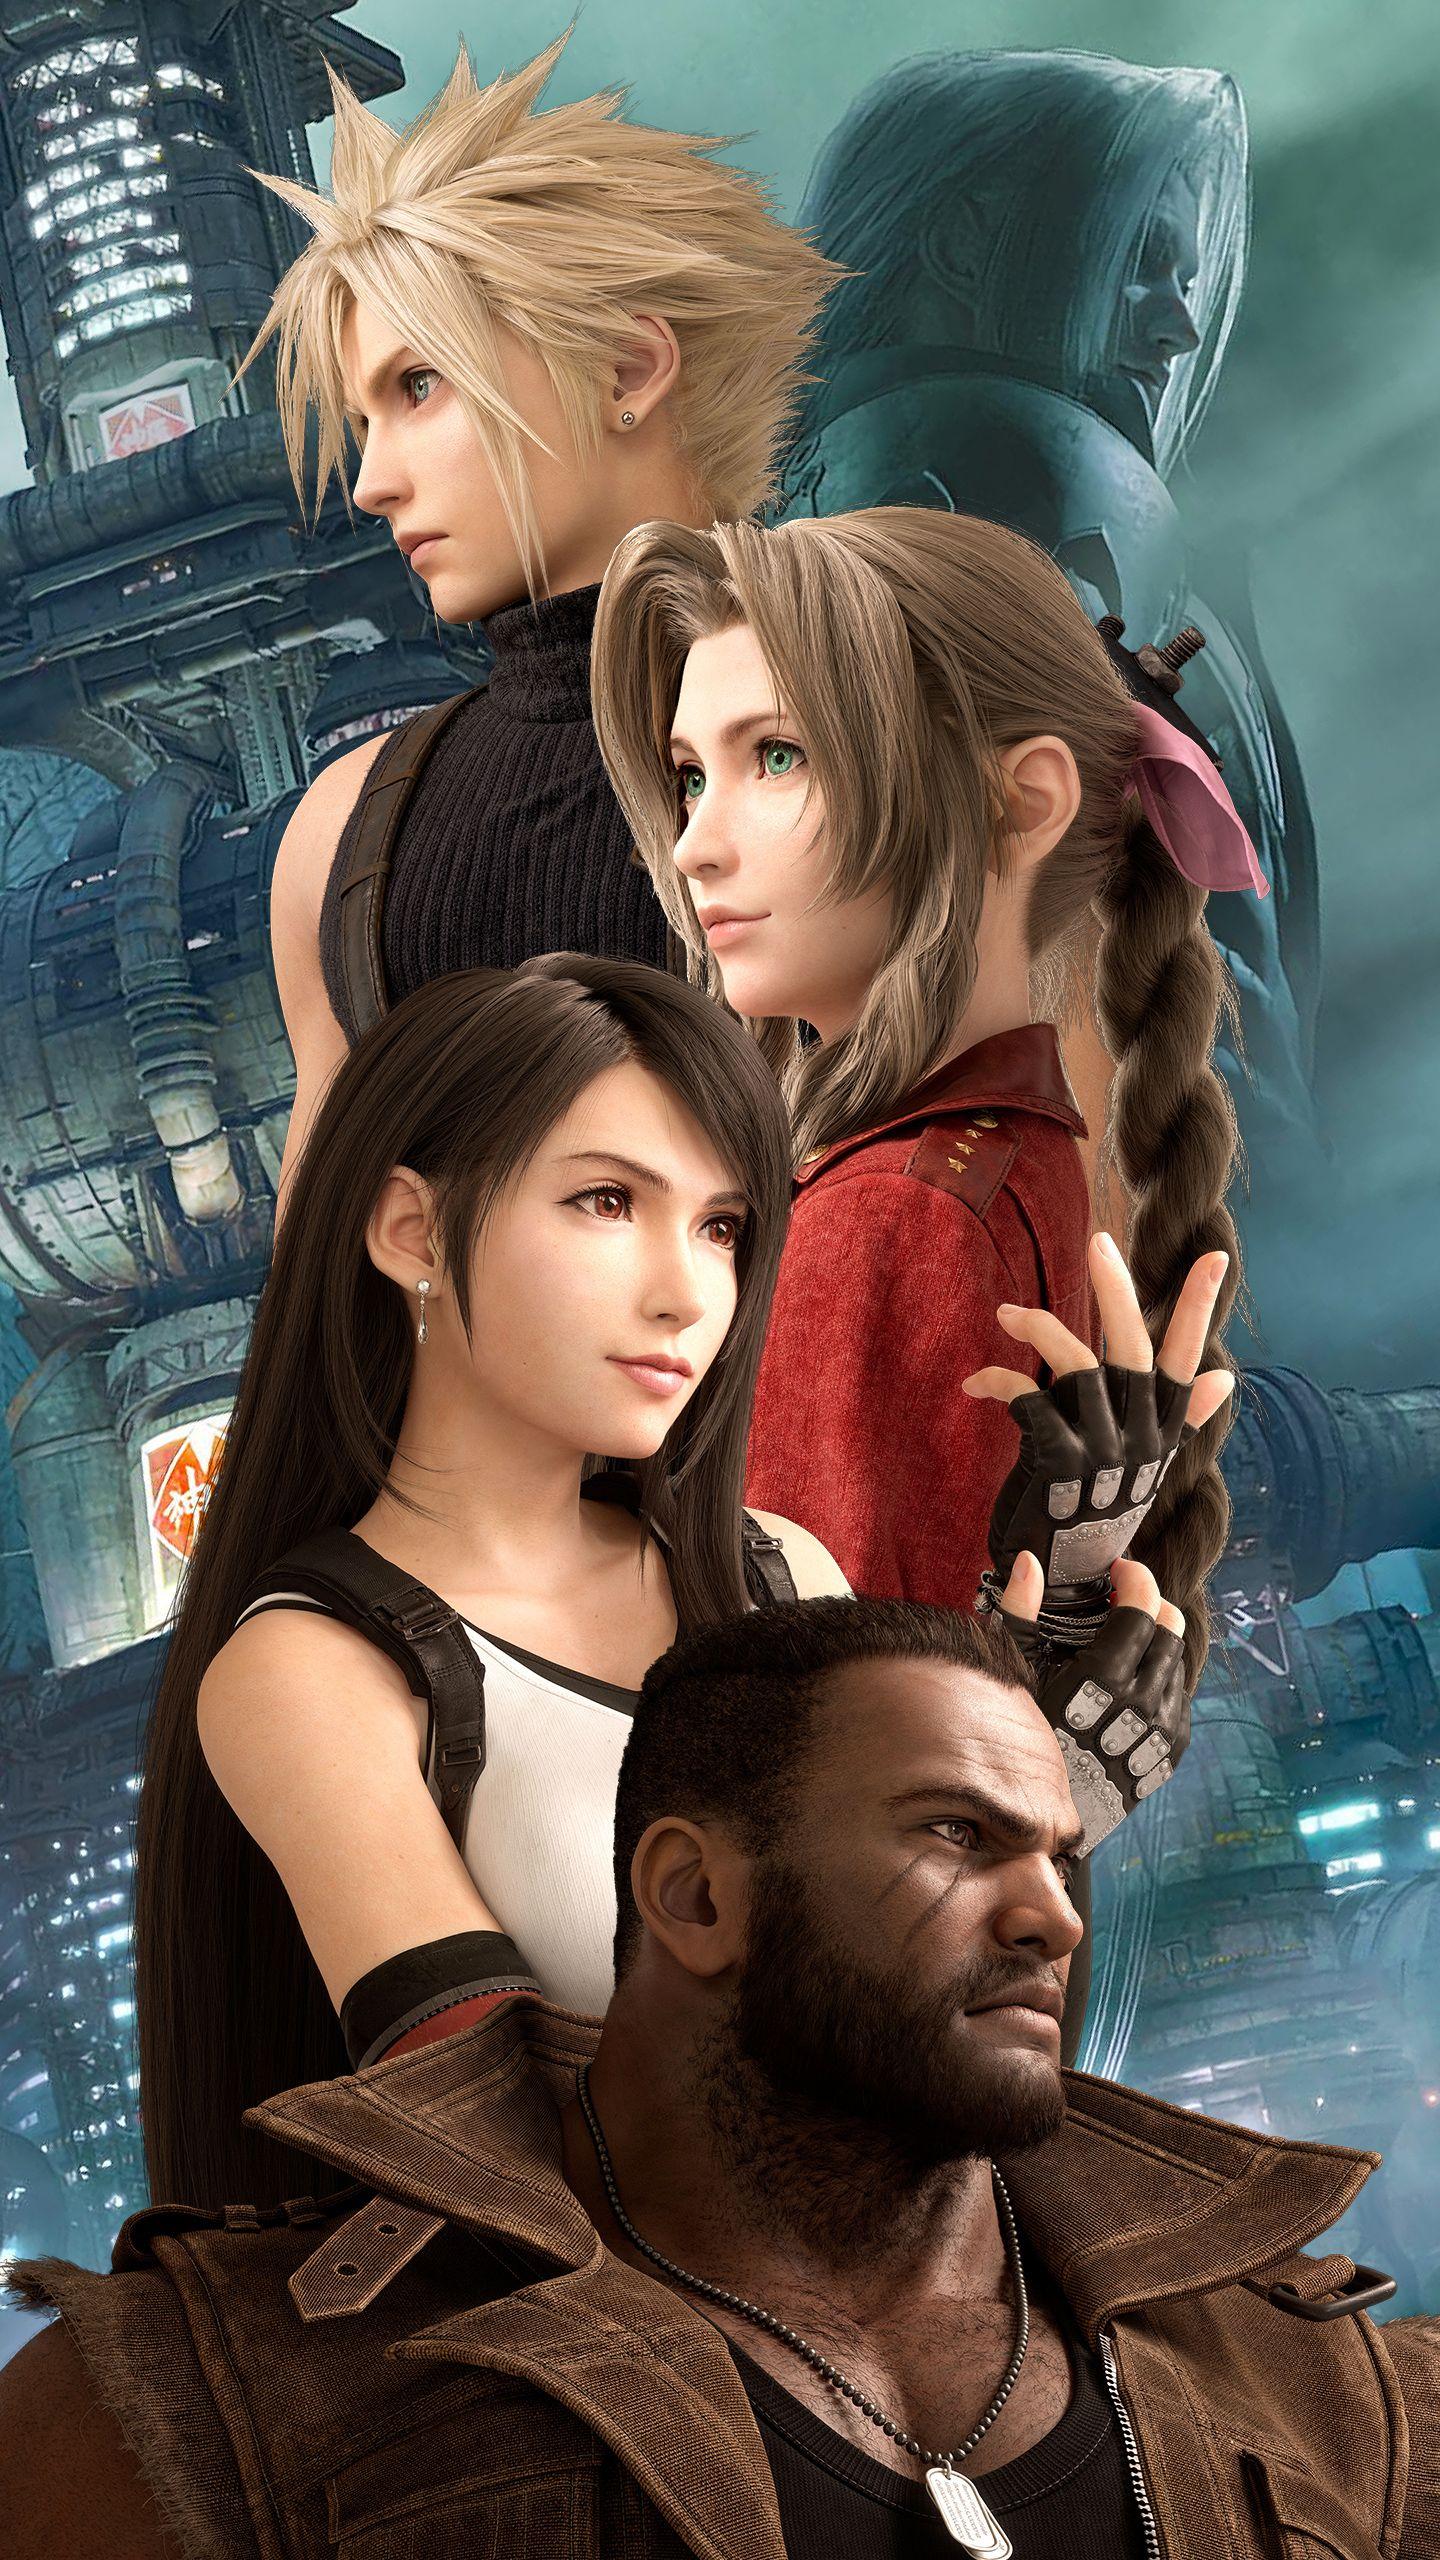 Video Game Final Fantasy VII Remake 4k Ultra HD Wallpaper by Raluca Stefan